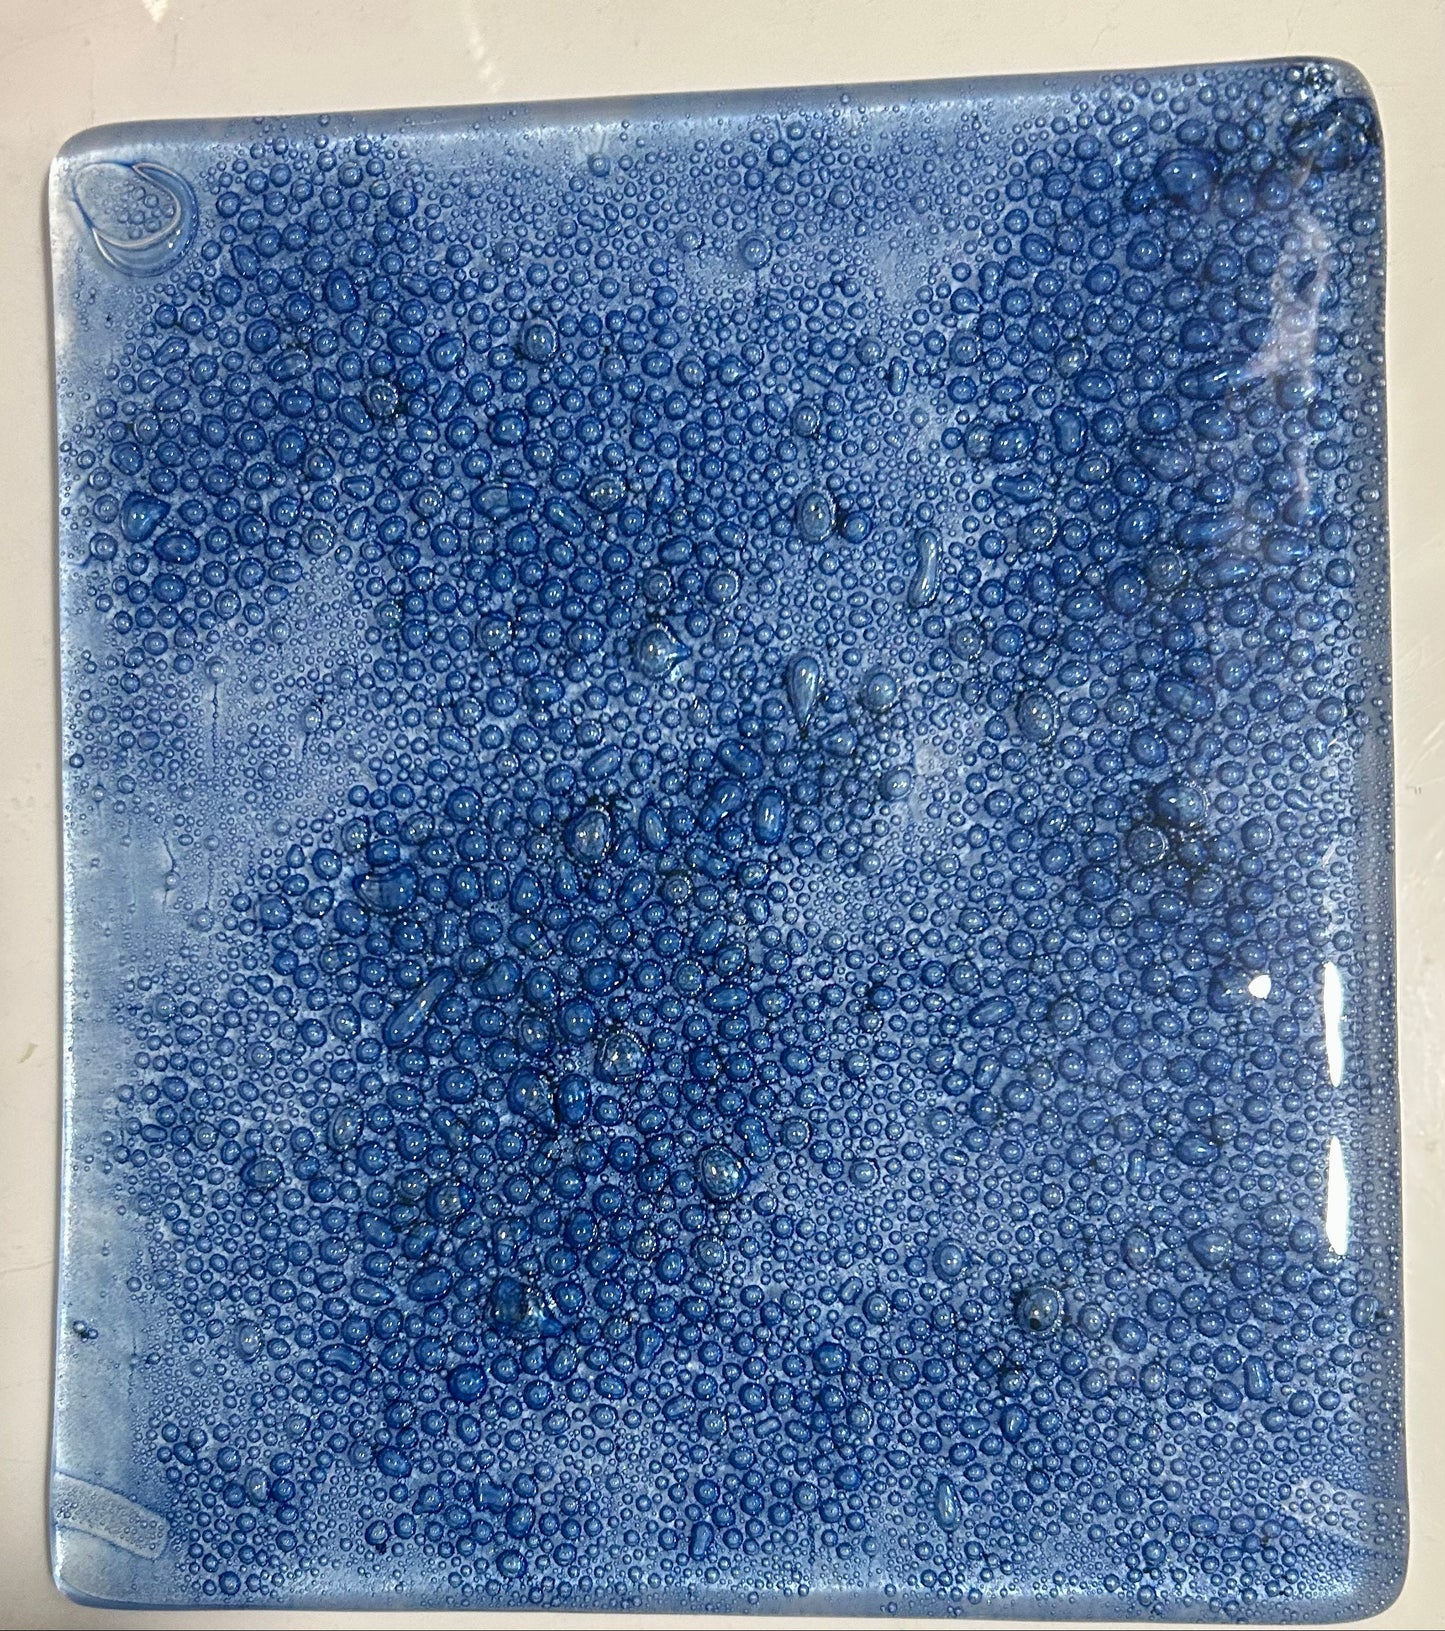 COE 90  / Bubble sheet glass/ Blue